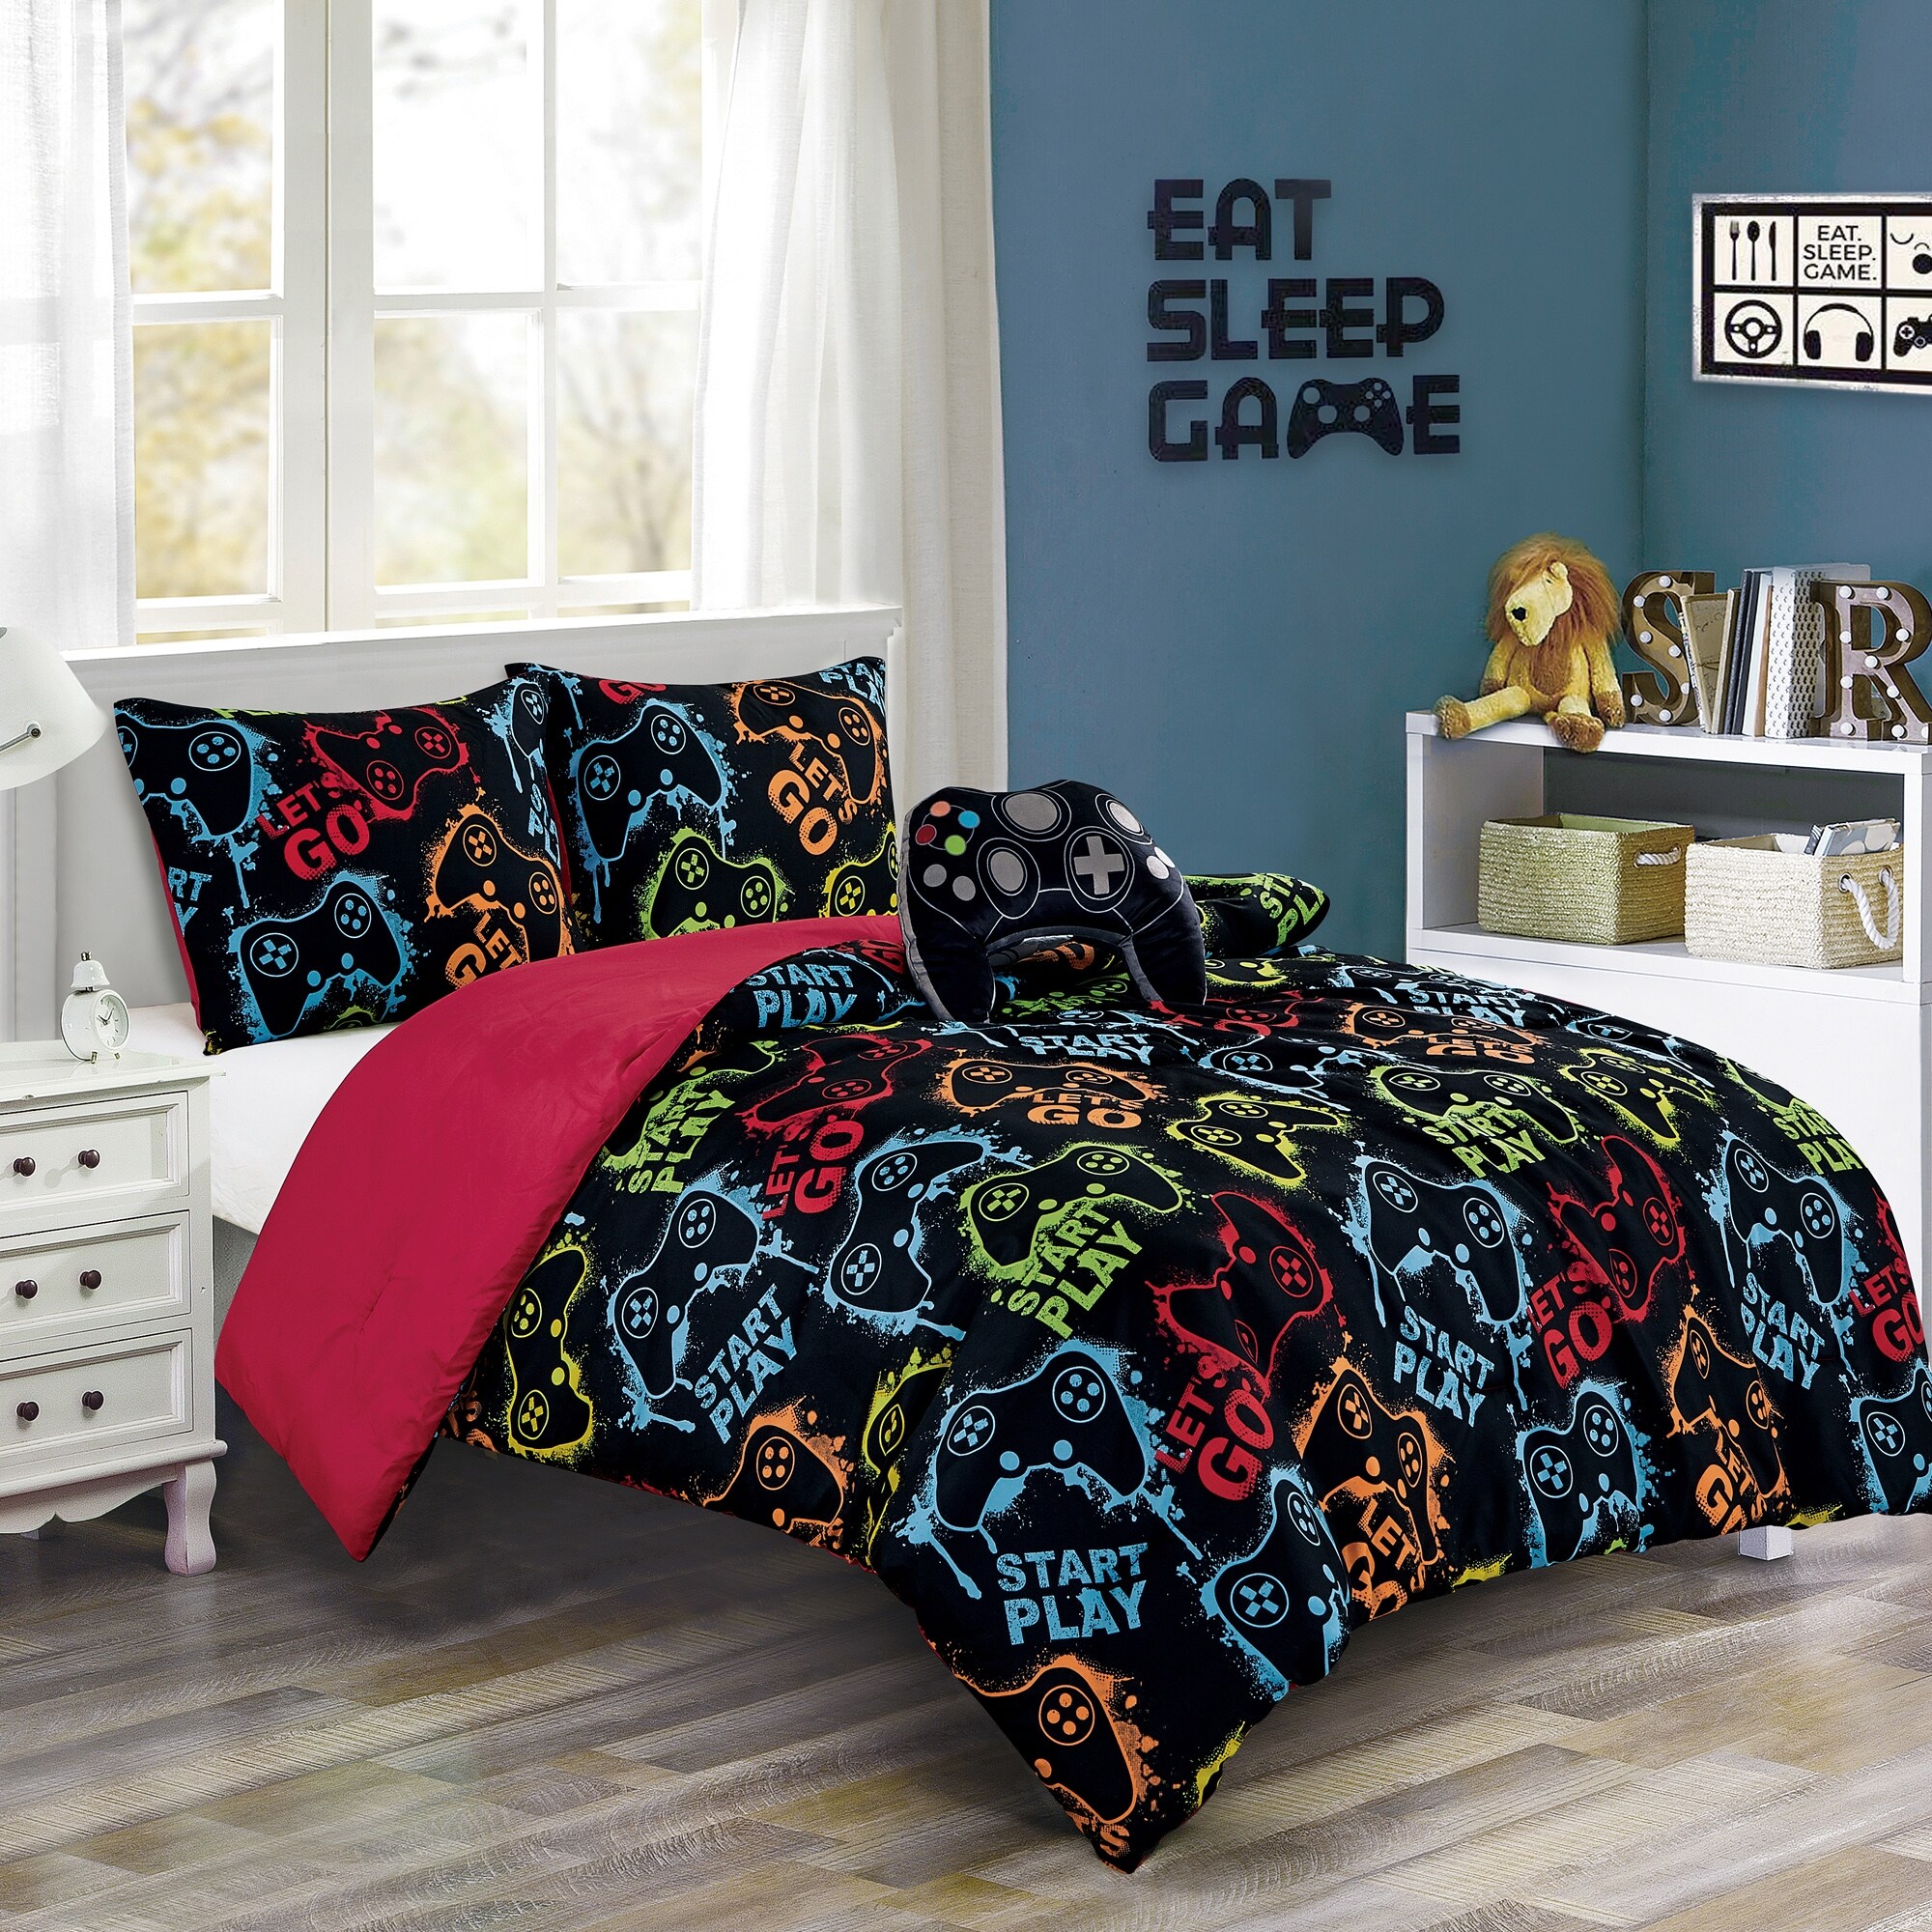 Wellco Bedding Comforter Set Bed In A Bag 4 Piece Microfiber Bedding Sets Oversized Bedroom Comforters, Game